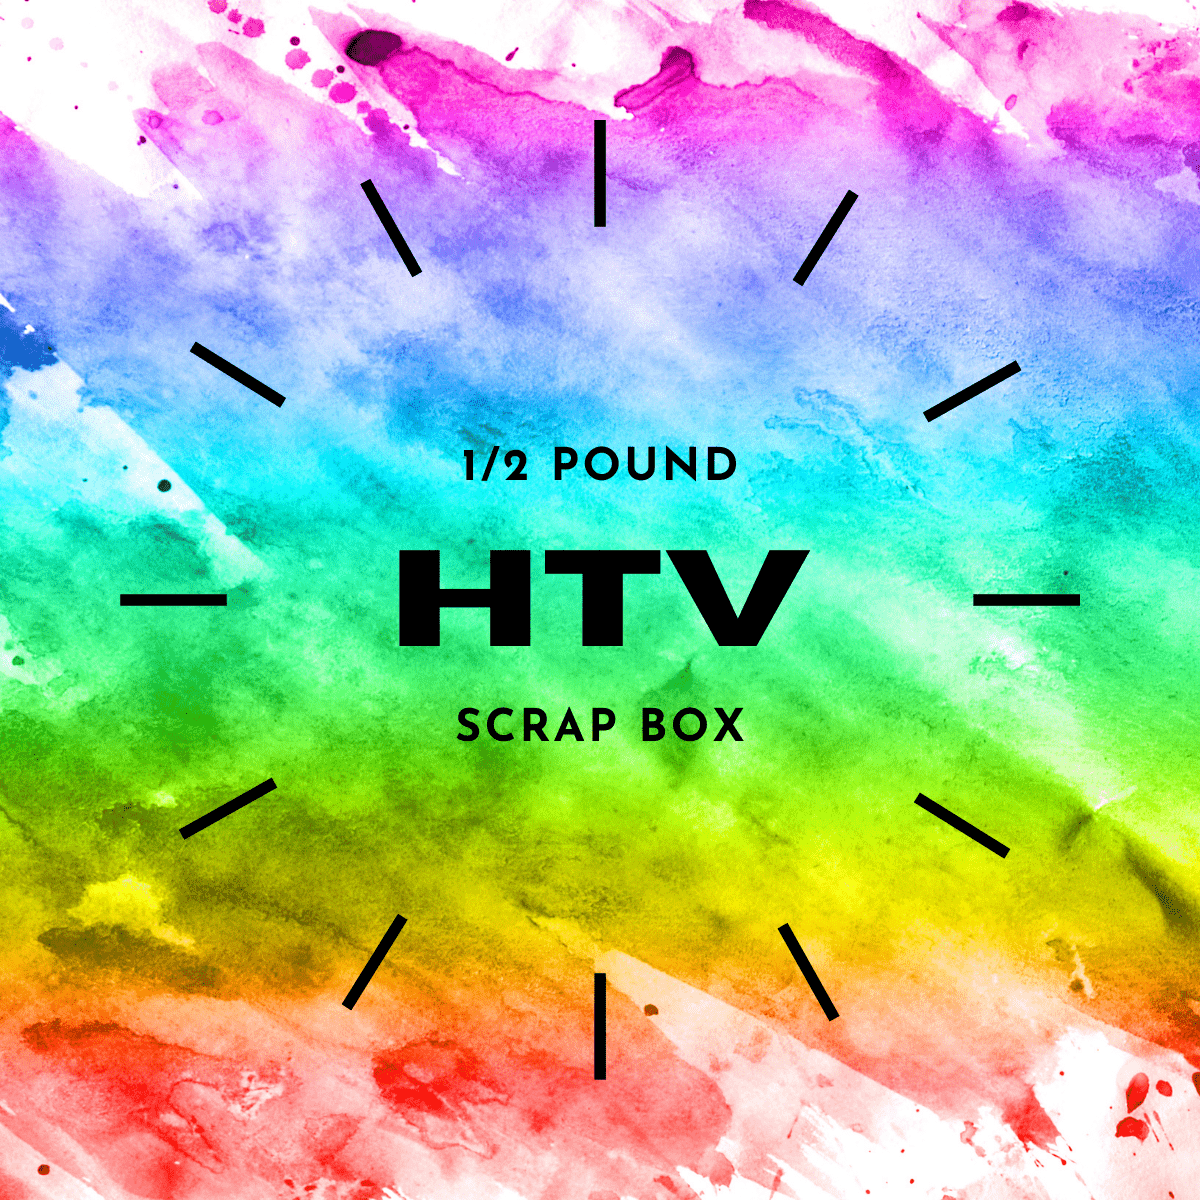 HALF POUND HTV SCRAP BOX - CLOSEOUT